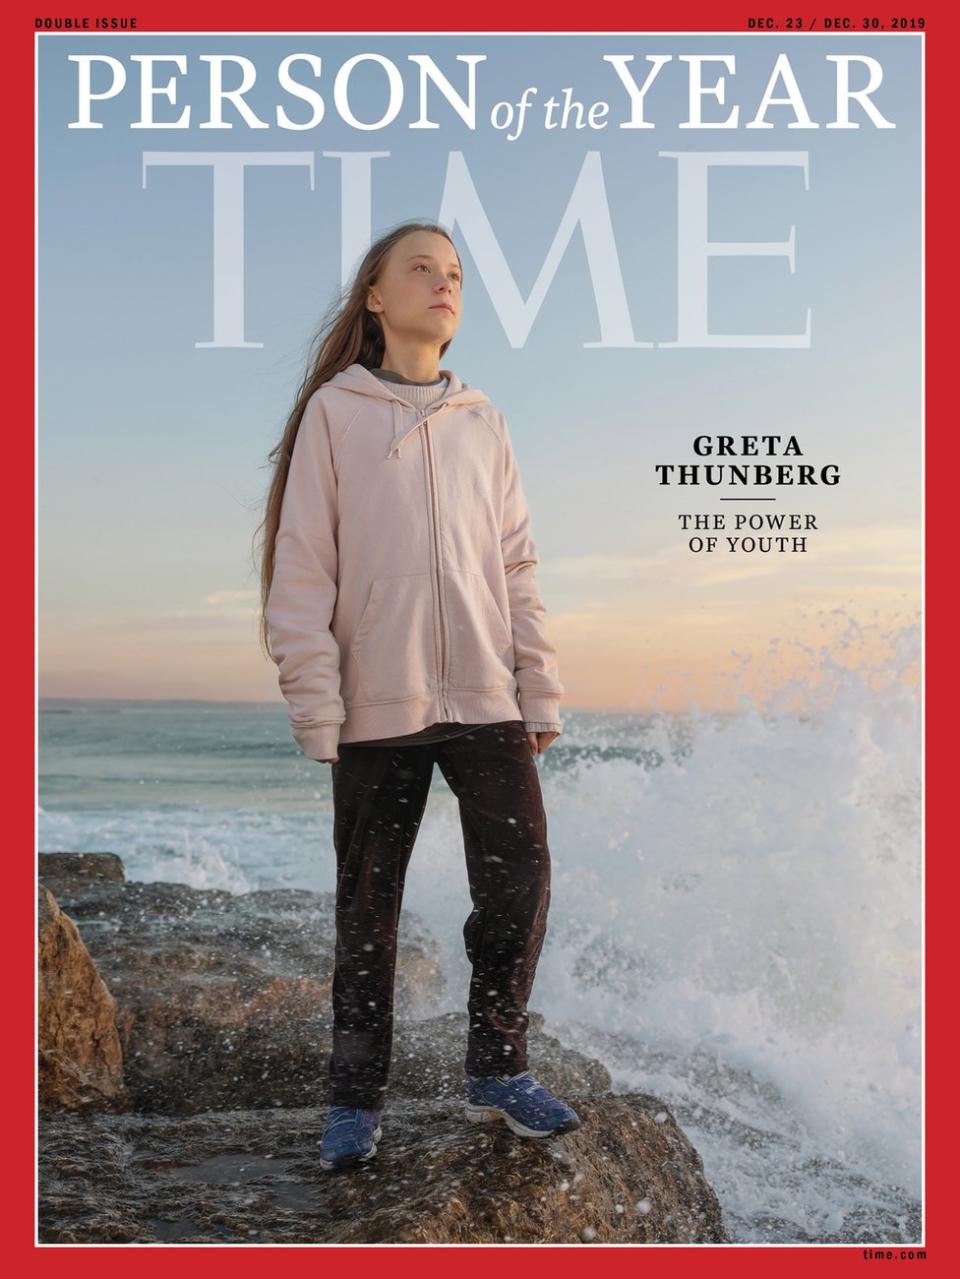 Time magazine cover with Greta Thunberg